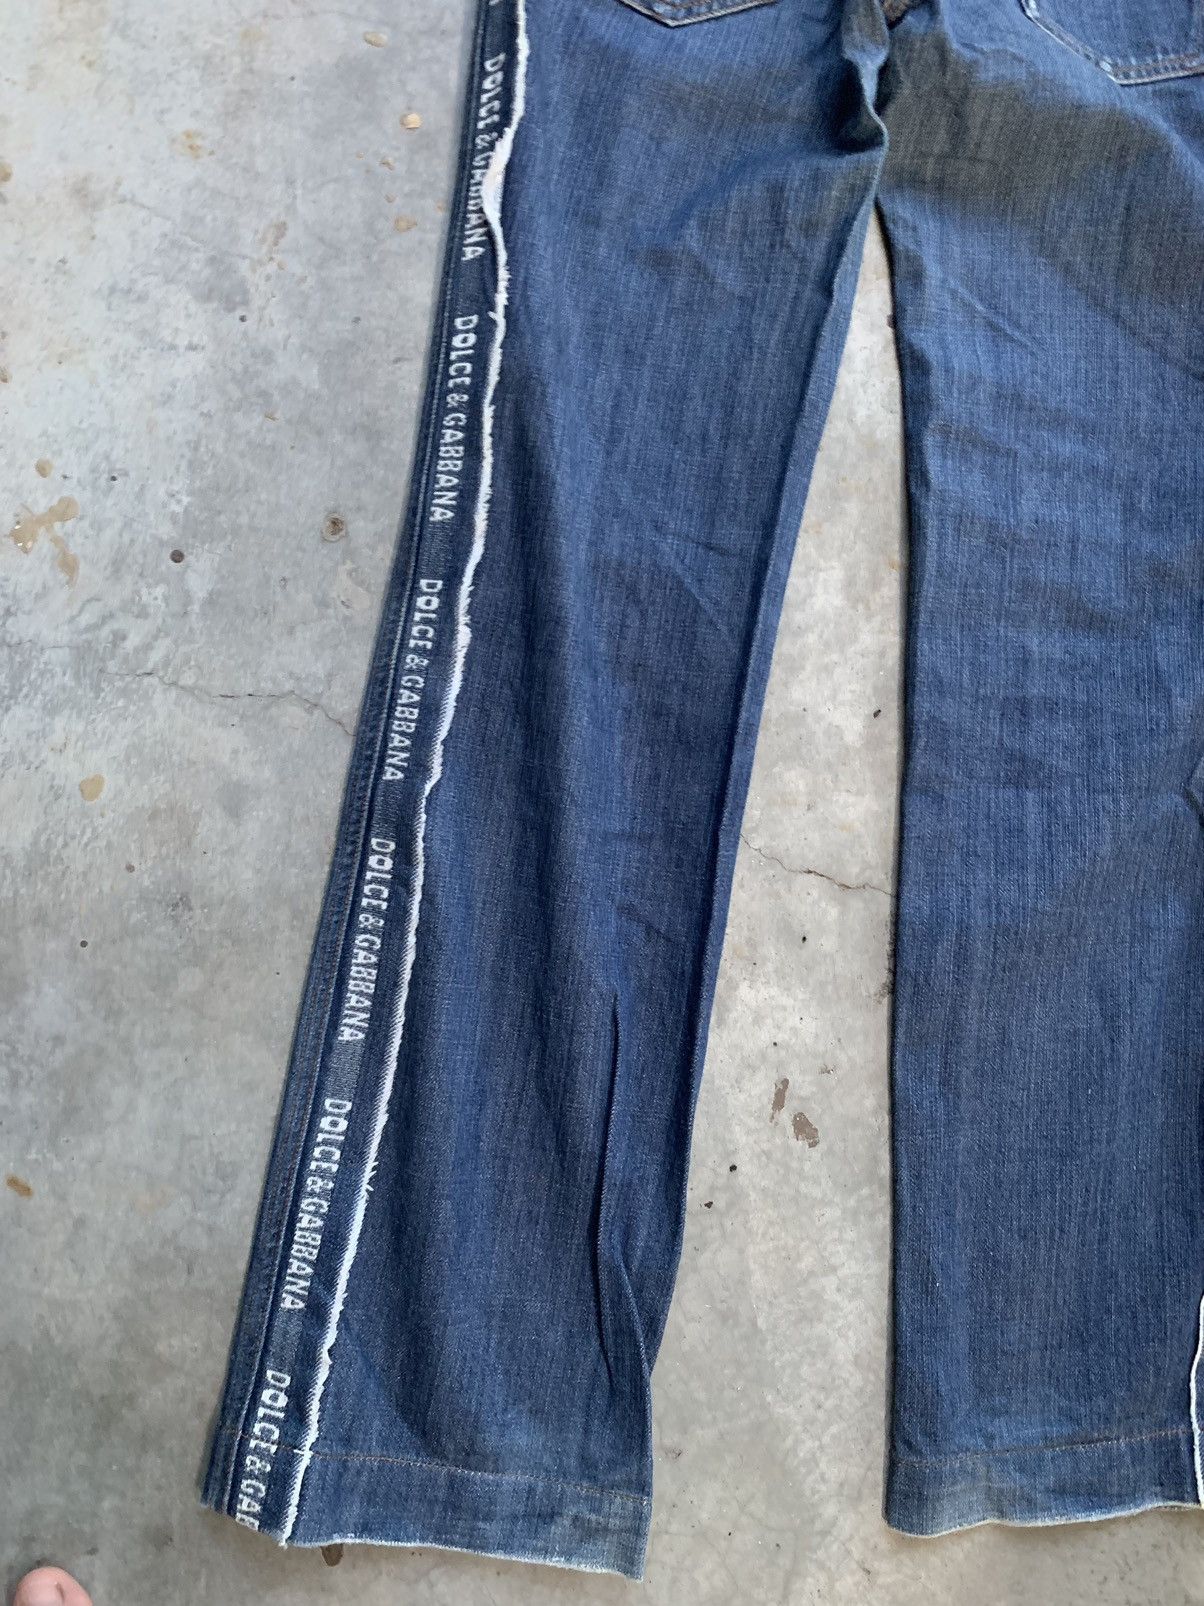 🔥VERY RARE🔥 Dolce gabbana Spellout Side Tape Jeans Denim - 5